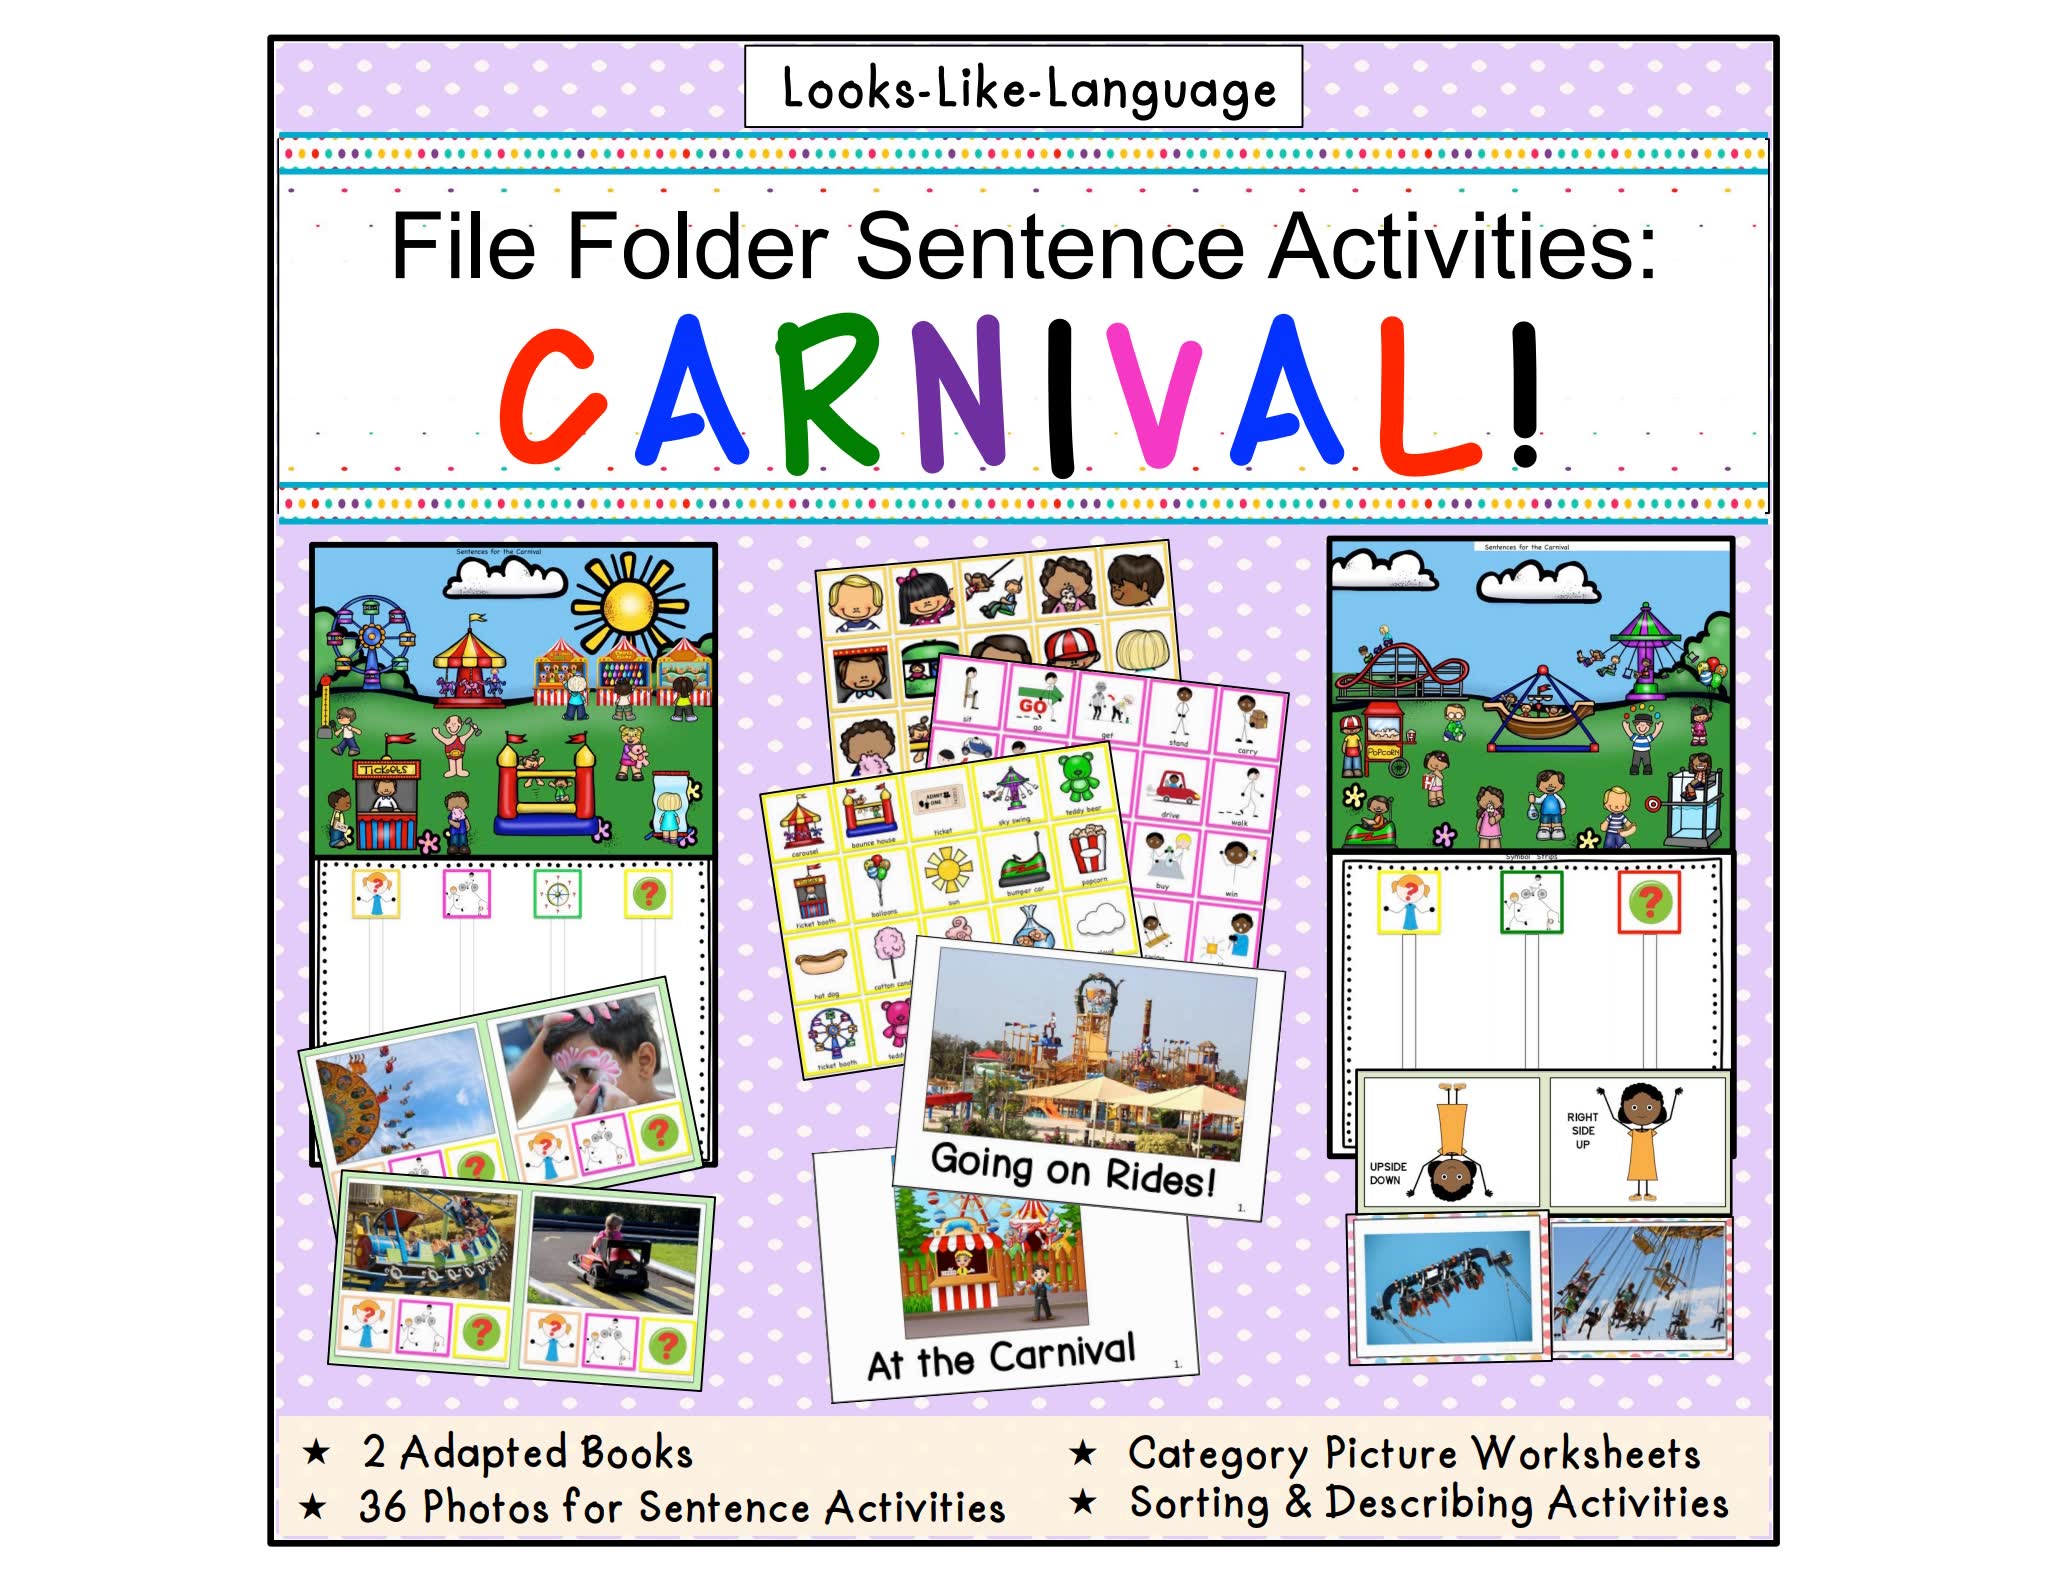 File-Foder-Games-Outdoors-Sentence-Activities0